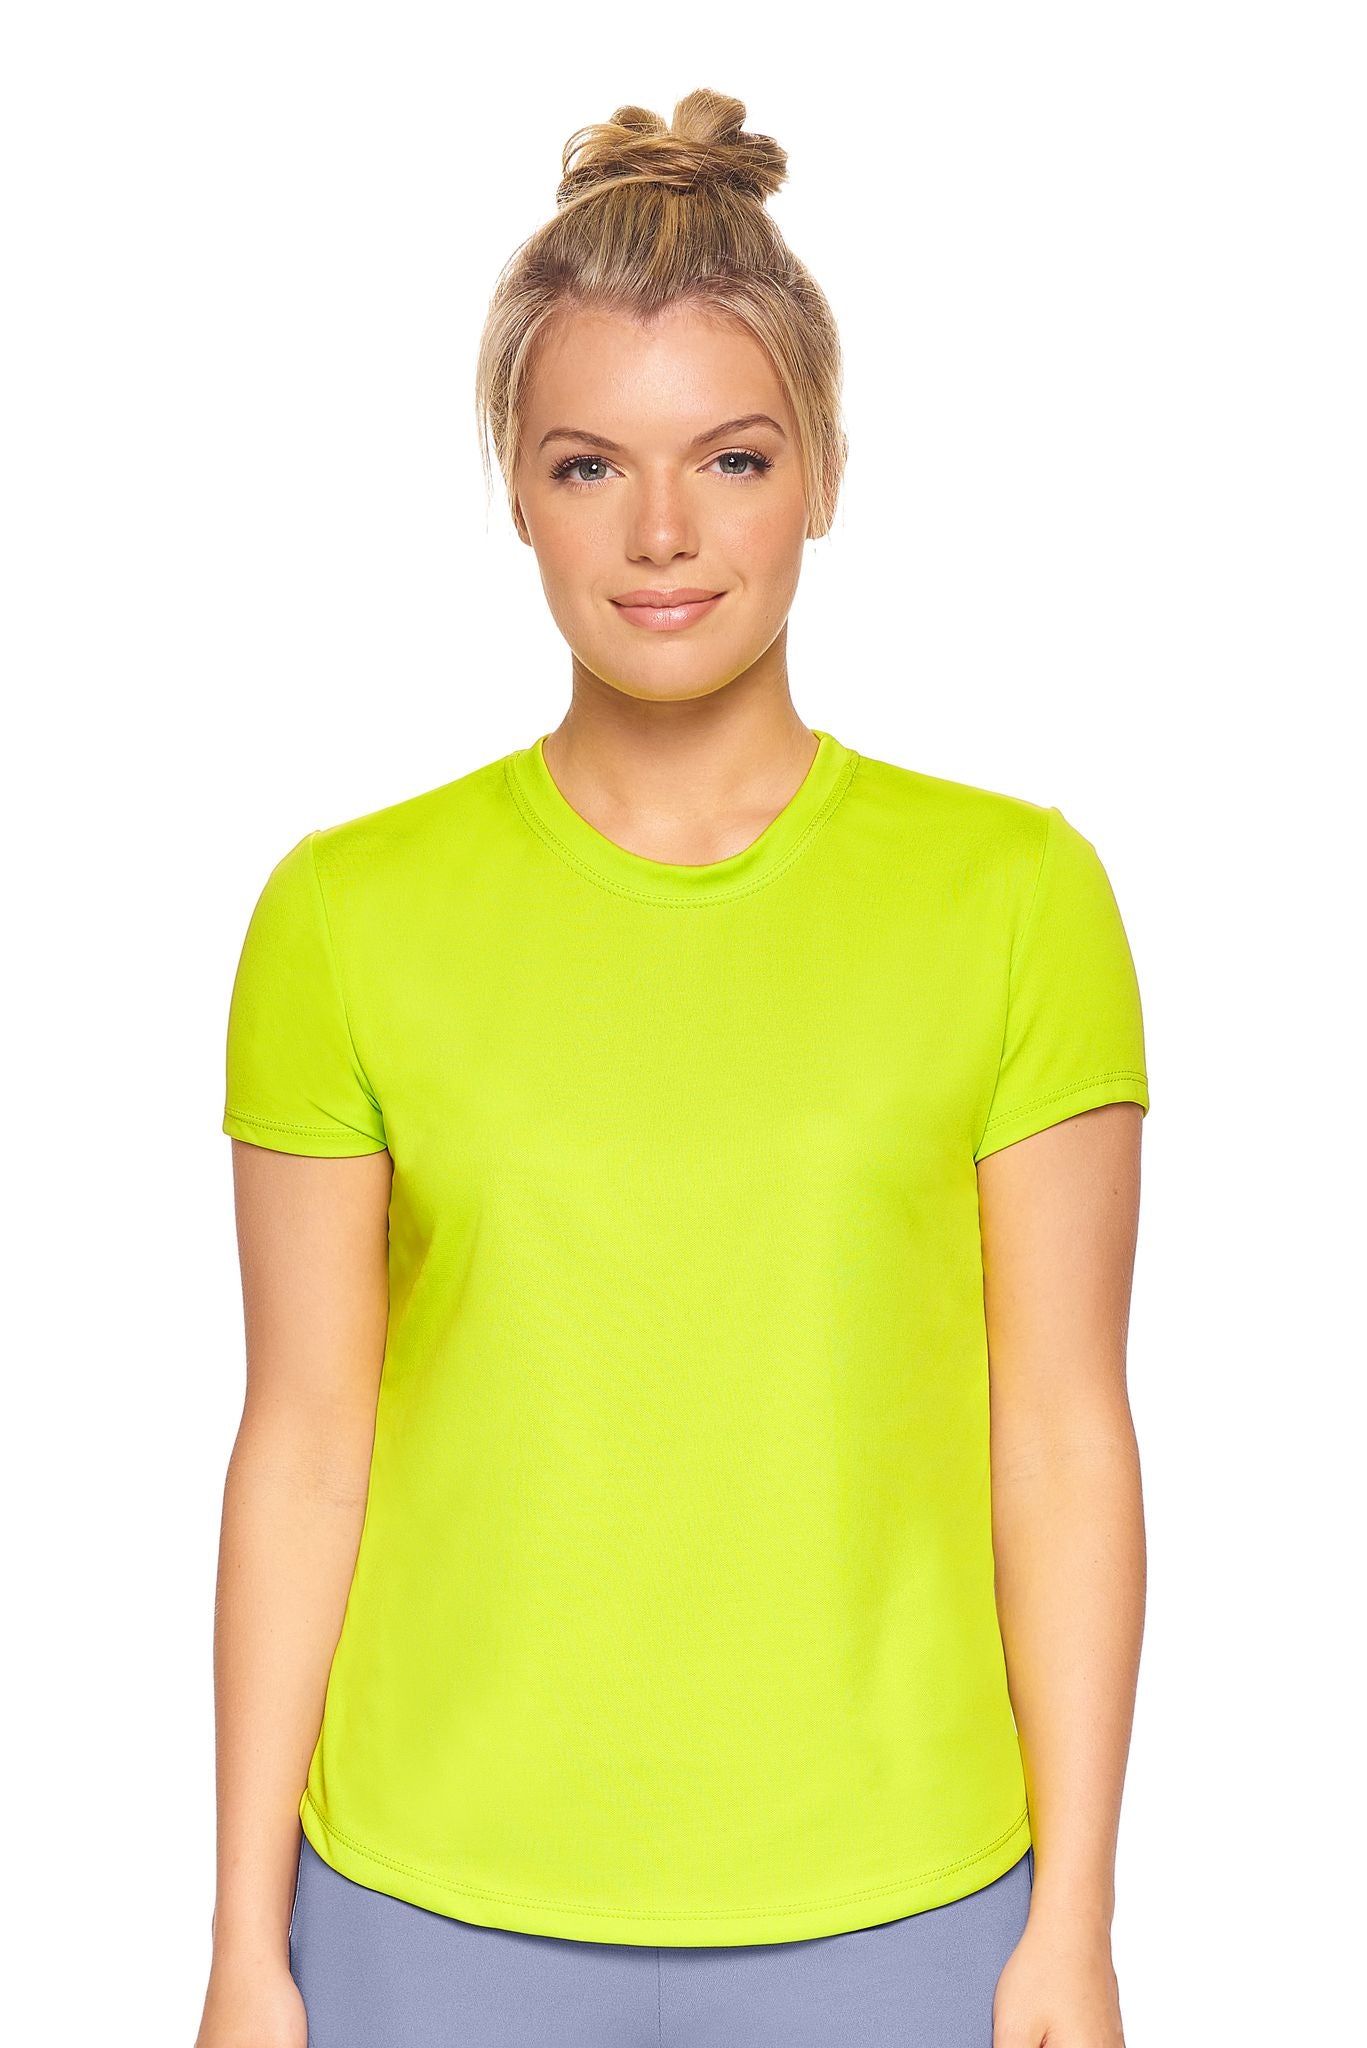 Expert Brand Retail Women's Pk MaX™ Crewneck Expert Tec Tee T-shirt key lime green#color_key-lime